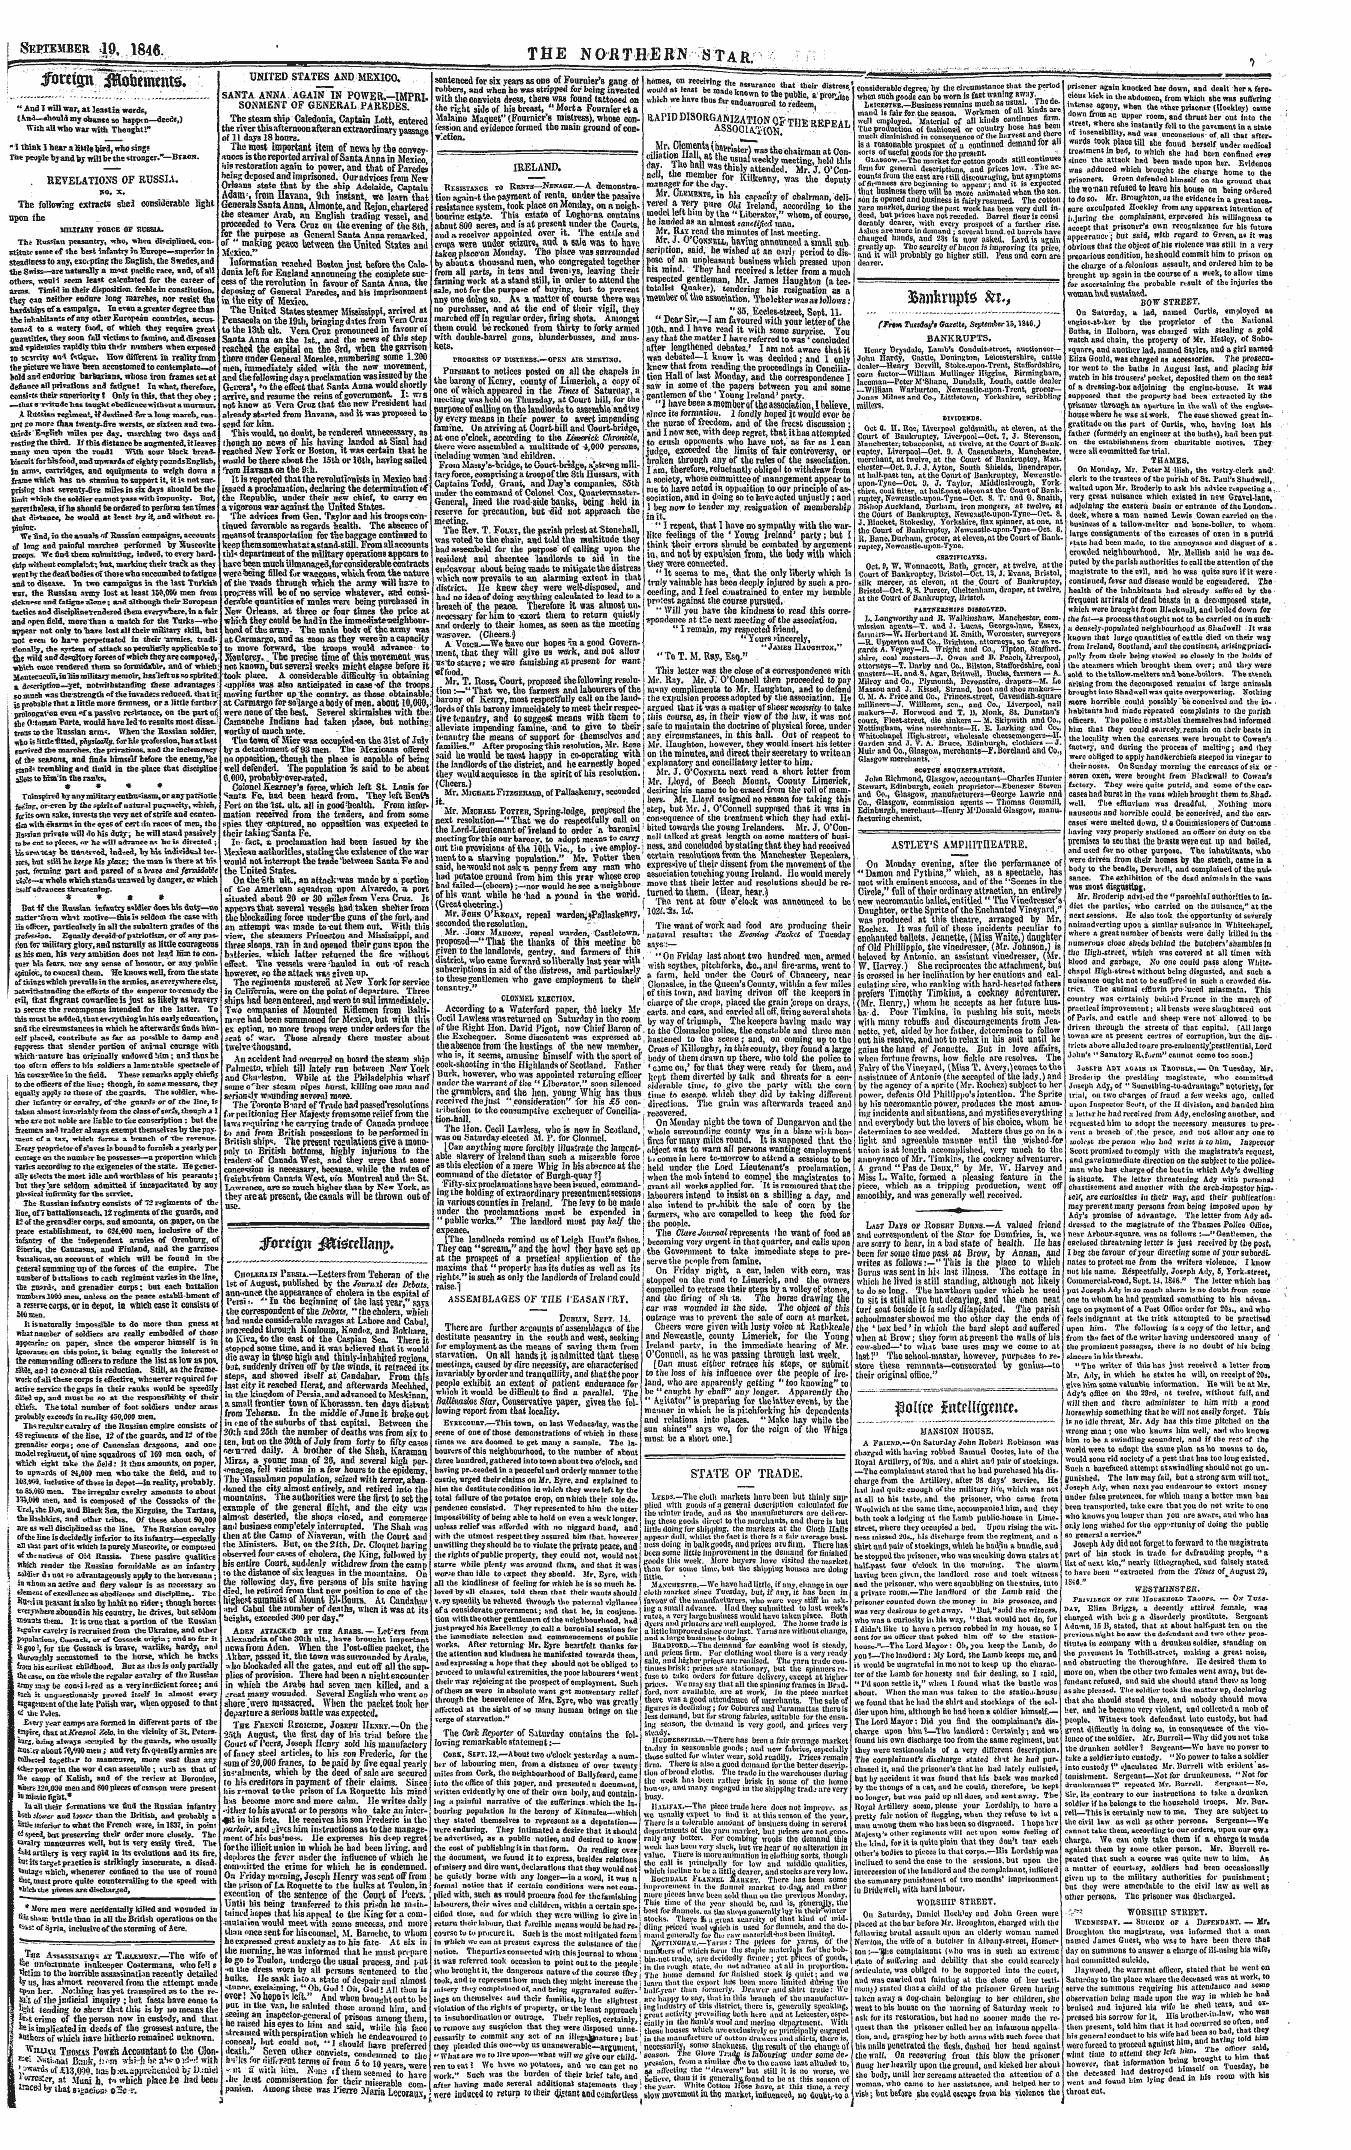 Northern Star (1837-1852): jS F Y, 3rd edition - Last Days Of Eobekt Burns.—A Valued Frie...